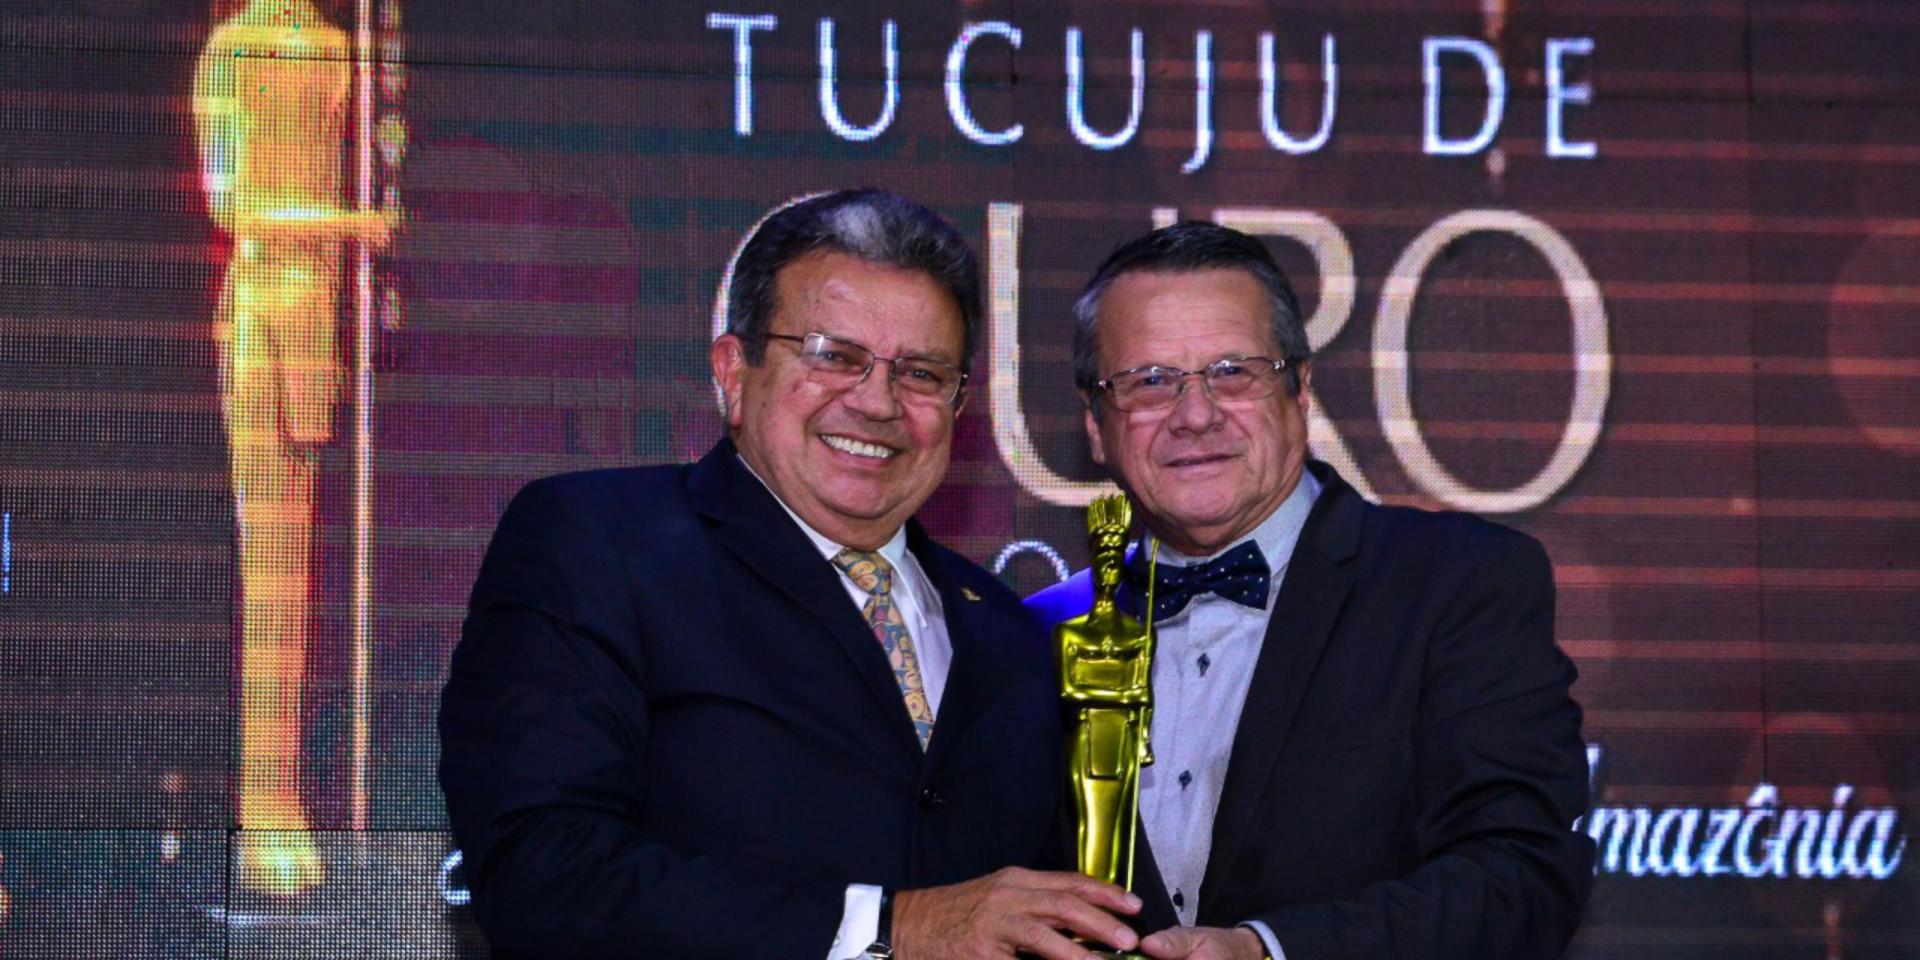 Presidente da FAEAP recebe estatueta Tucuju de Ouro 2018